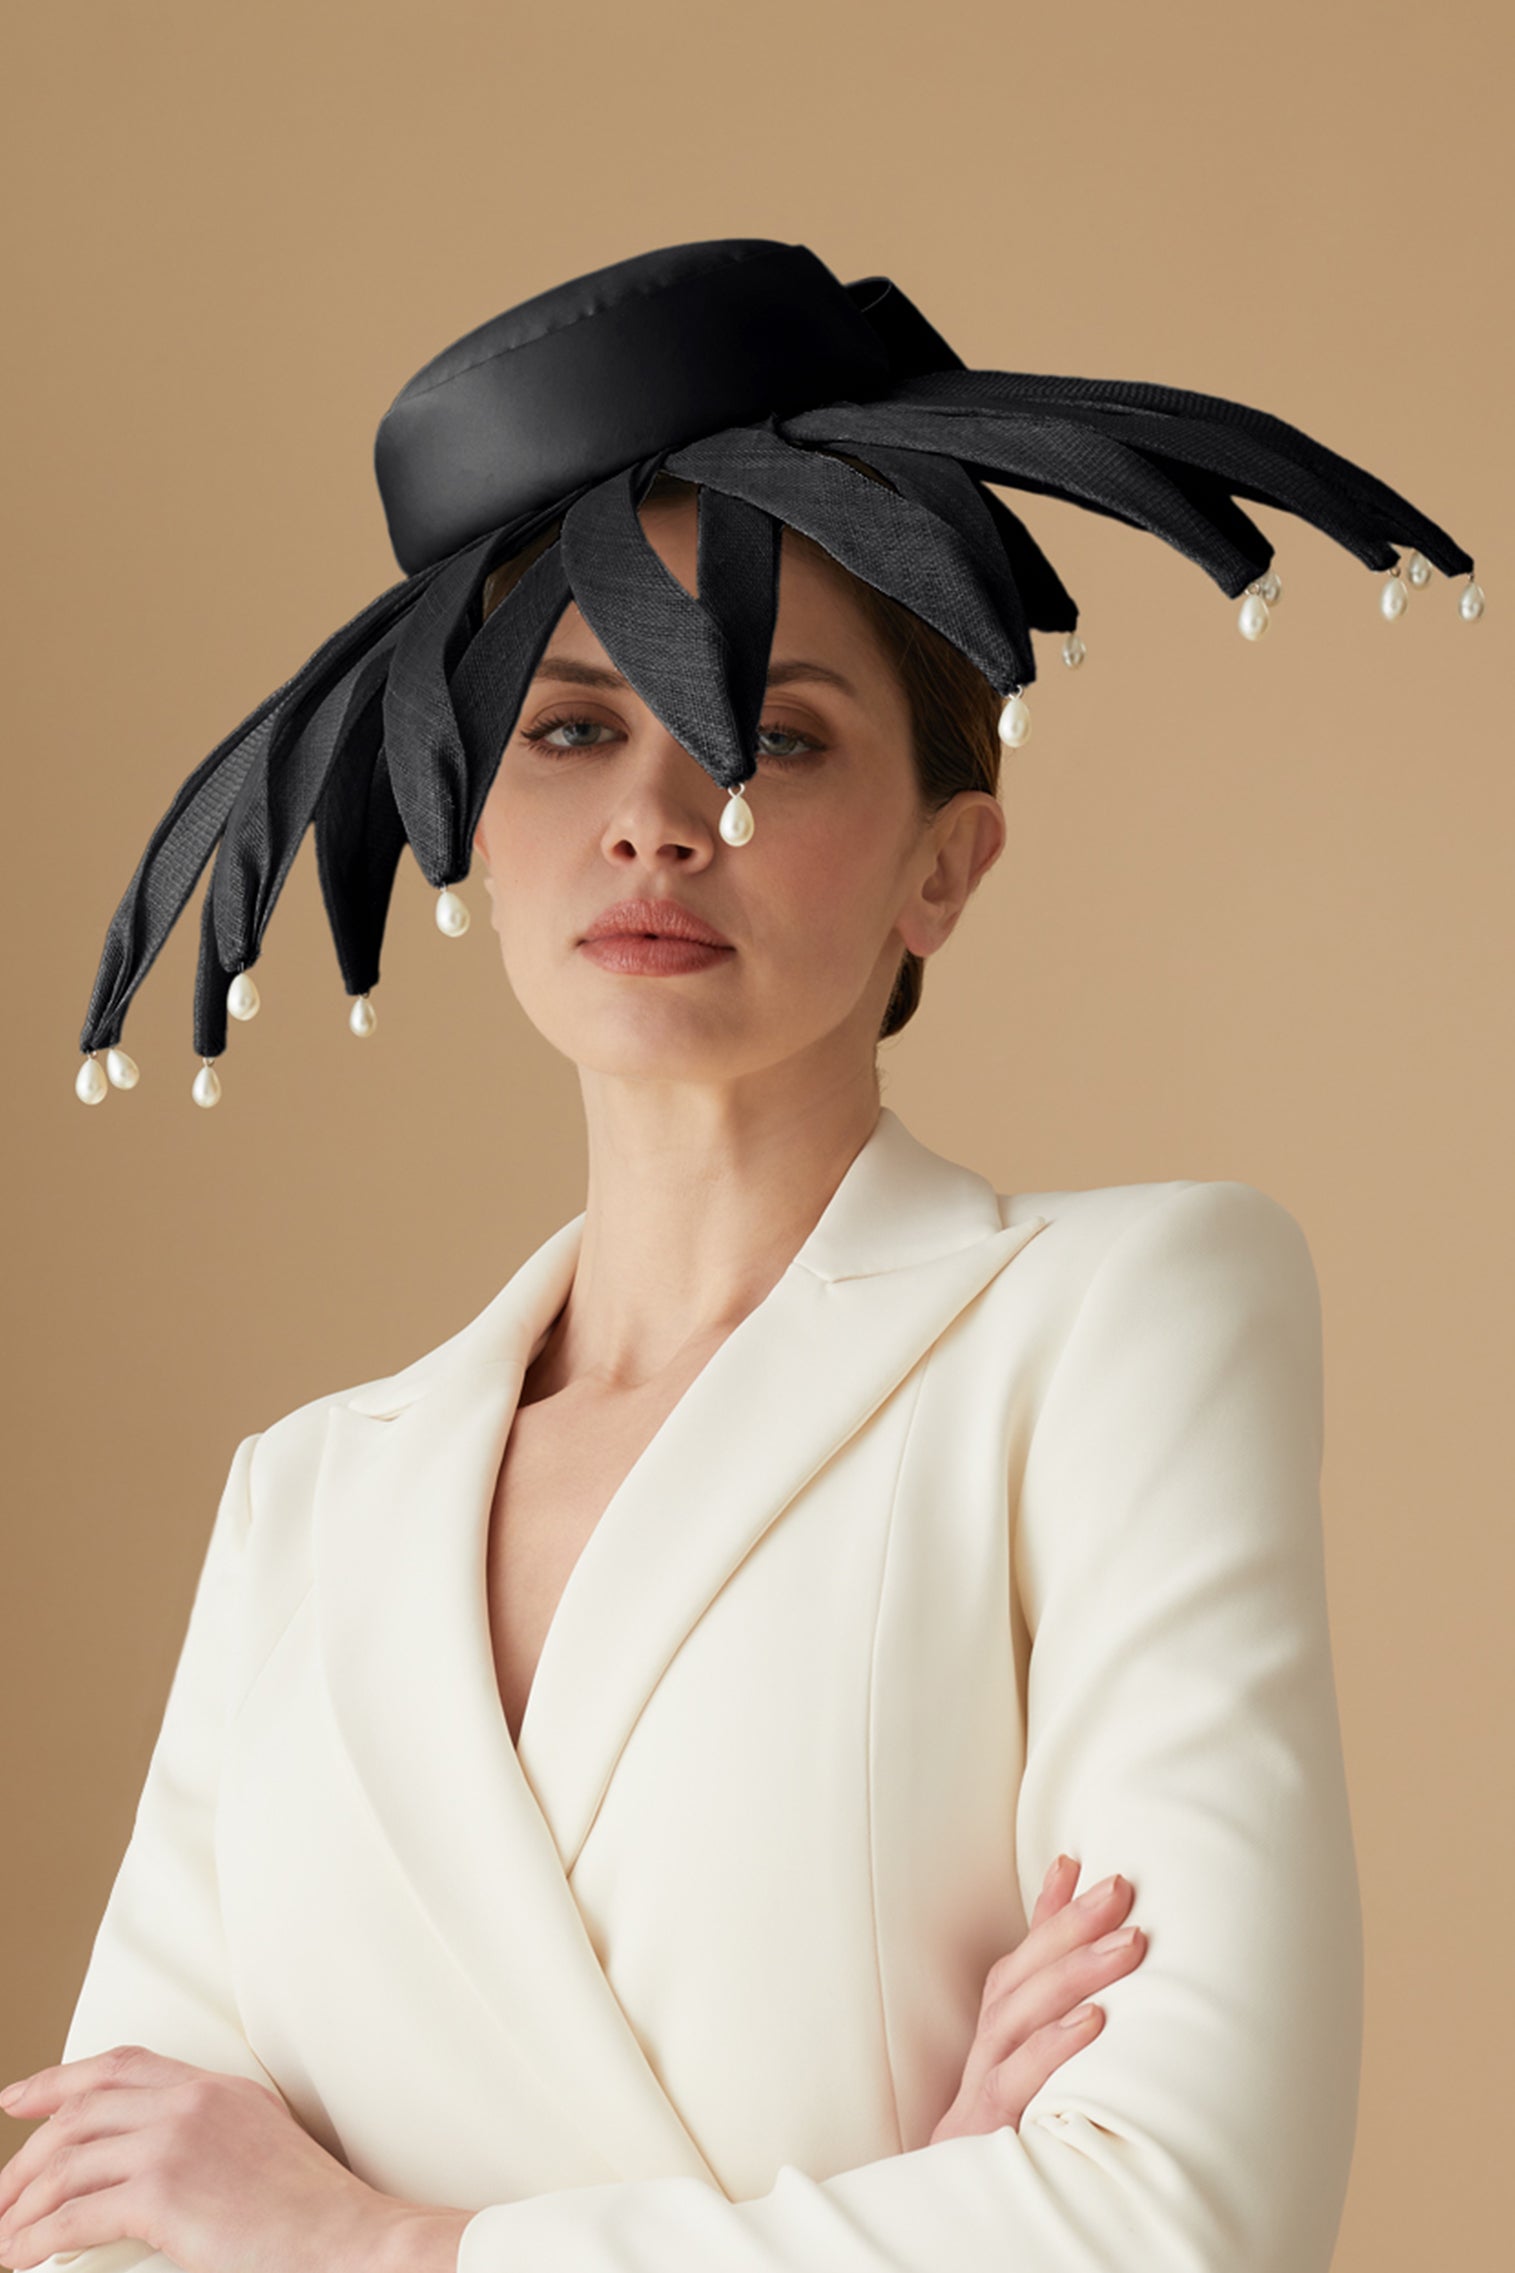 Sencha Black Wide Brim Hat - Black Hats & Headpieces for Women - Lock & Co. Hatters London UK